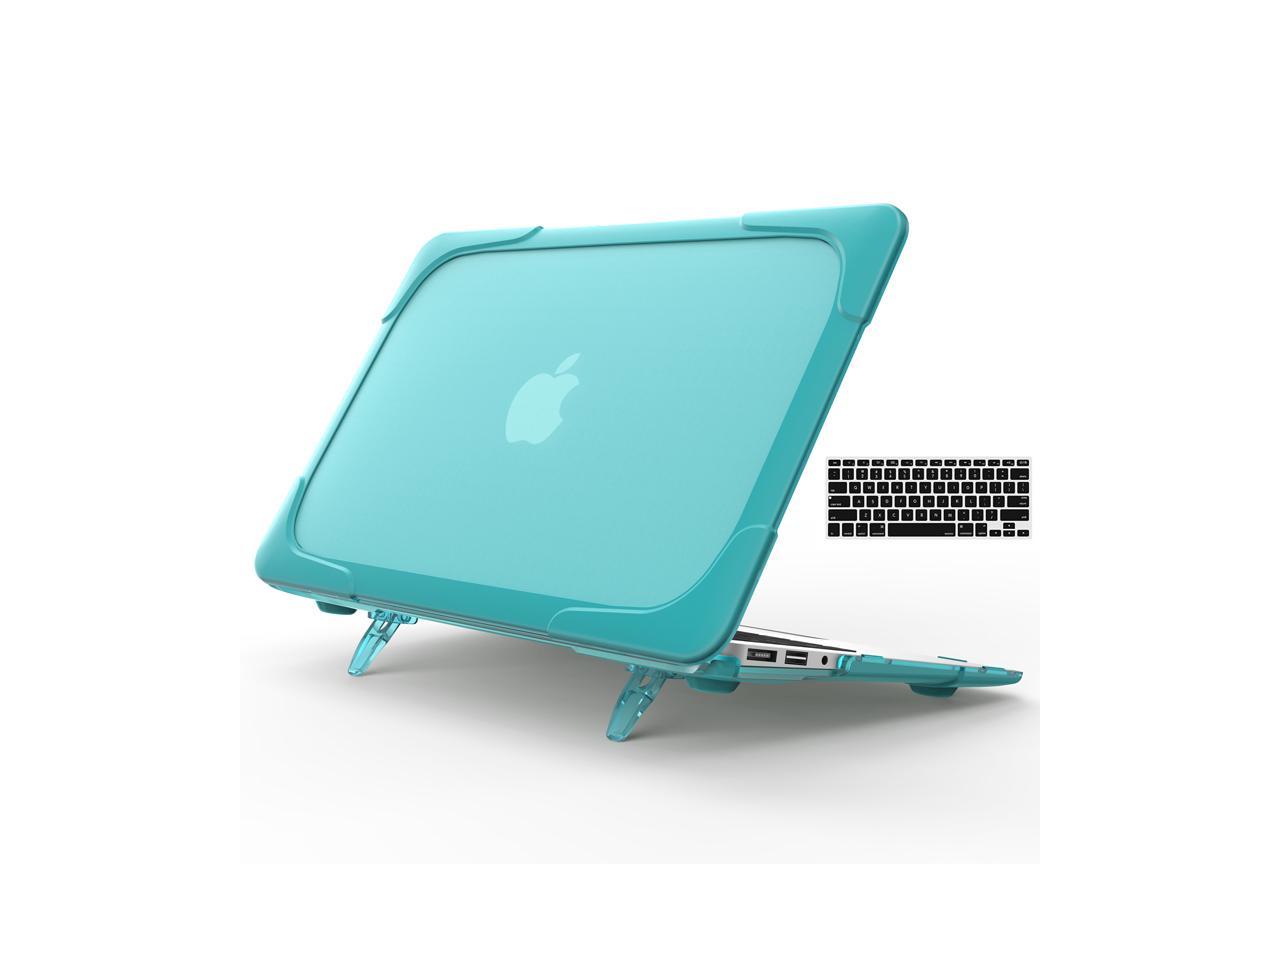 2in1 Matt Hard Case shell Keyboard Cover for Macbook Air Pro 11 12 13 15 inch 